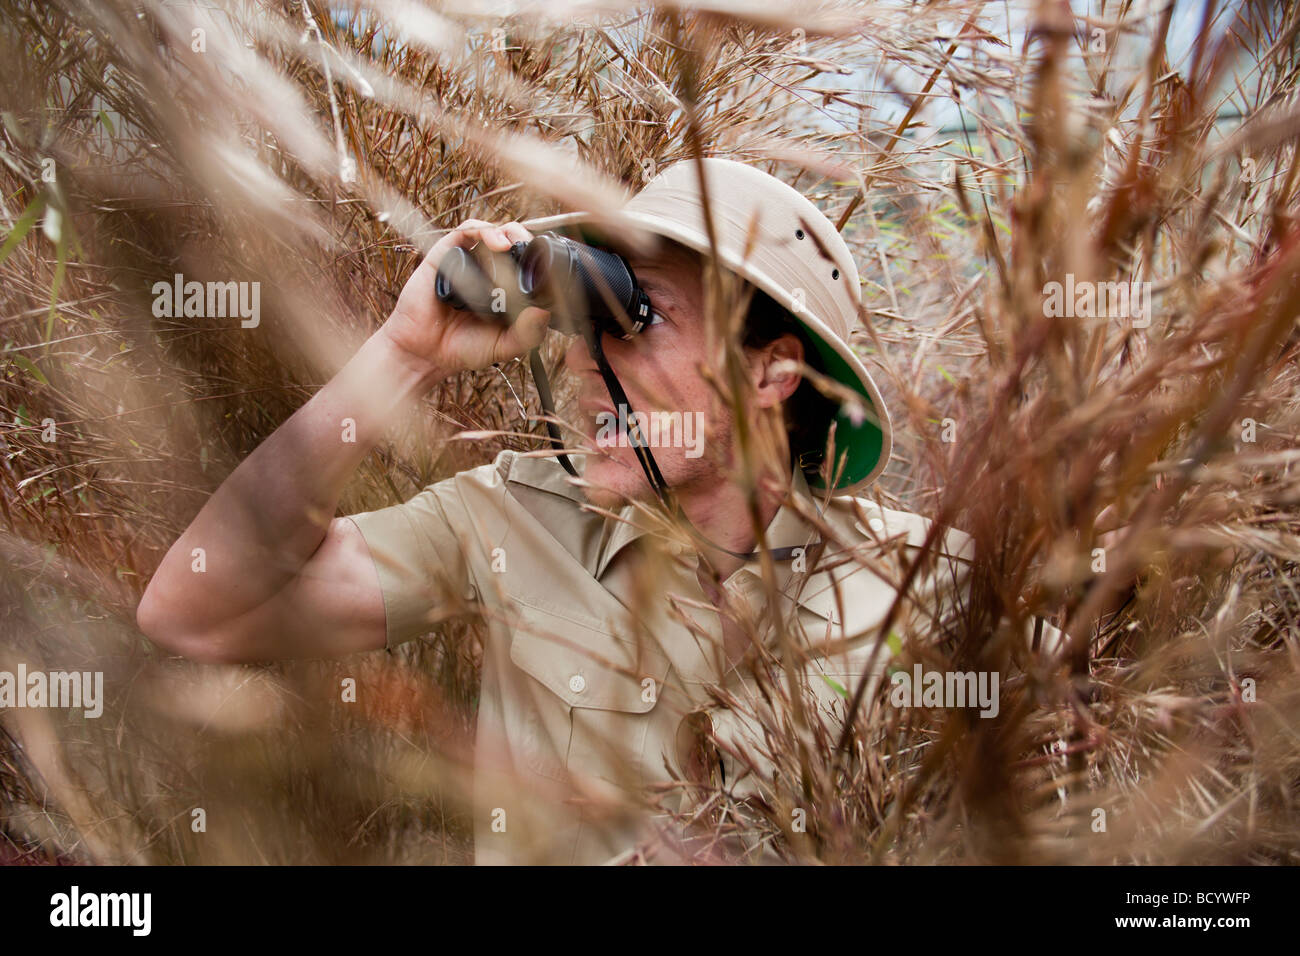 Mann im Dschungel-Outfit mit dem Fernglas Stockfotografie - Alamy